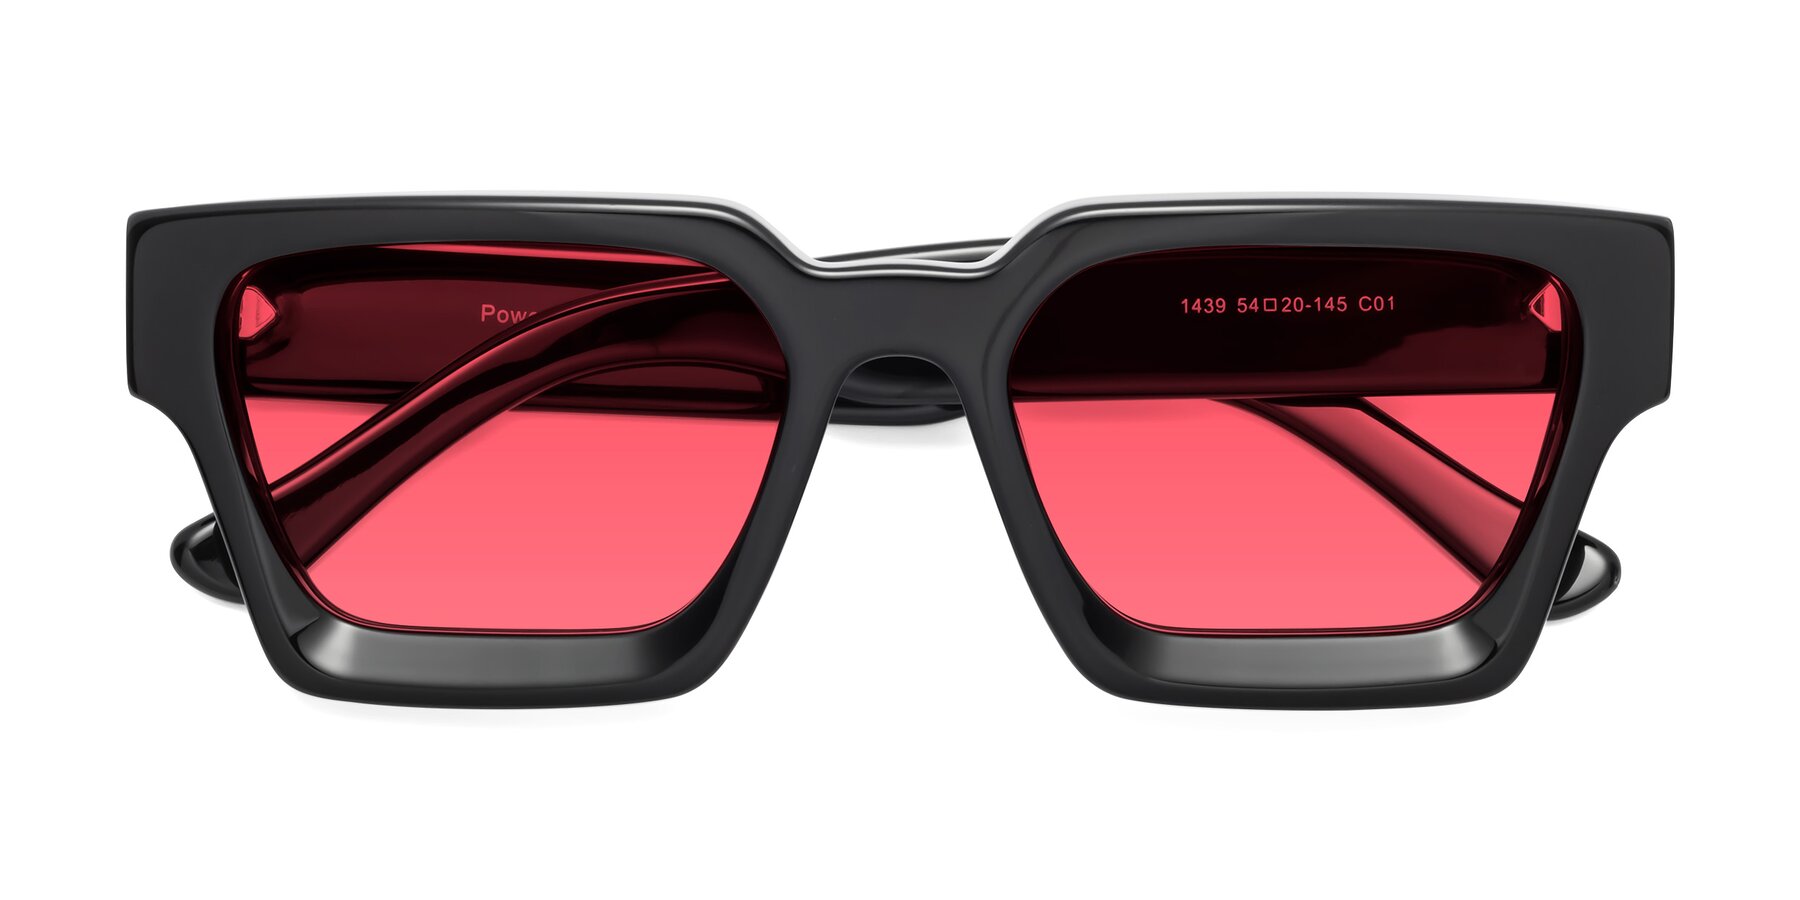 Stolt Ødelæggelse Moralsk Black Thick Geek-Chic Geometric Tinted Sunglasses with Red Sunwear Lenses -  Powers